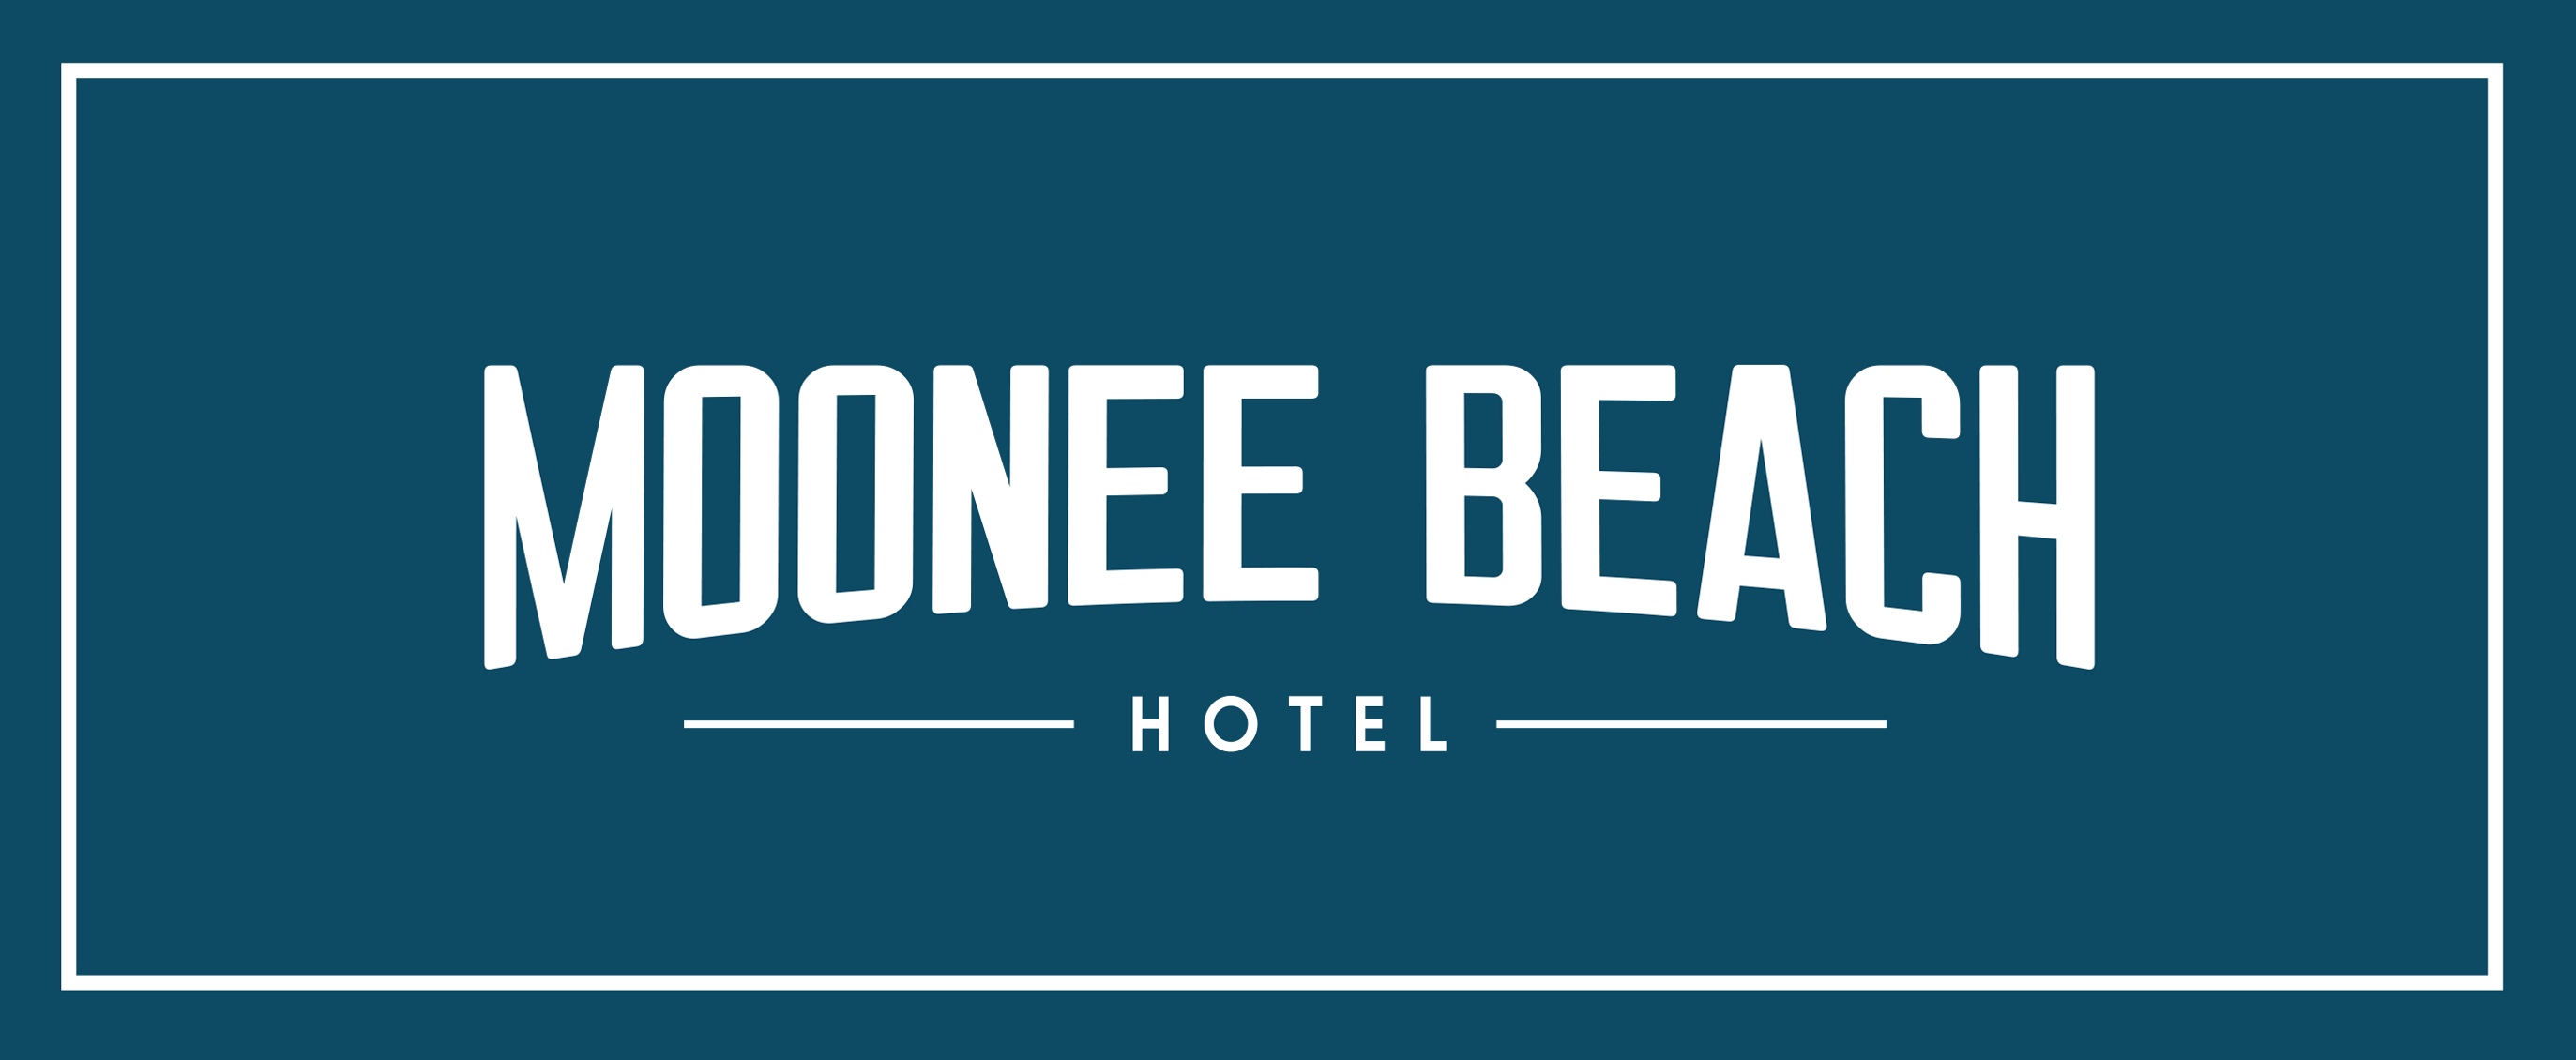 Moonee Beach Hotel Logo